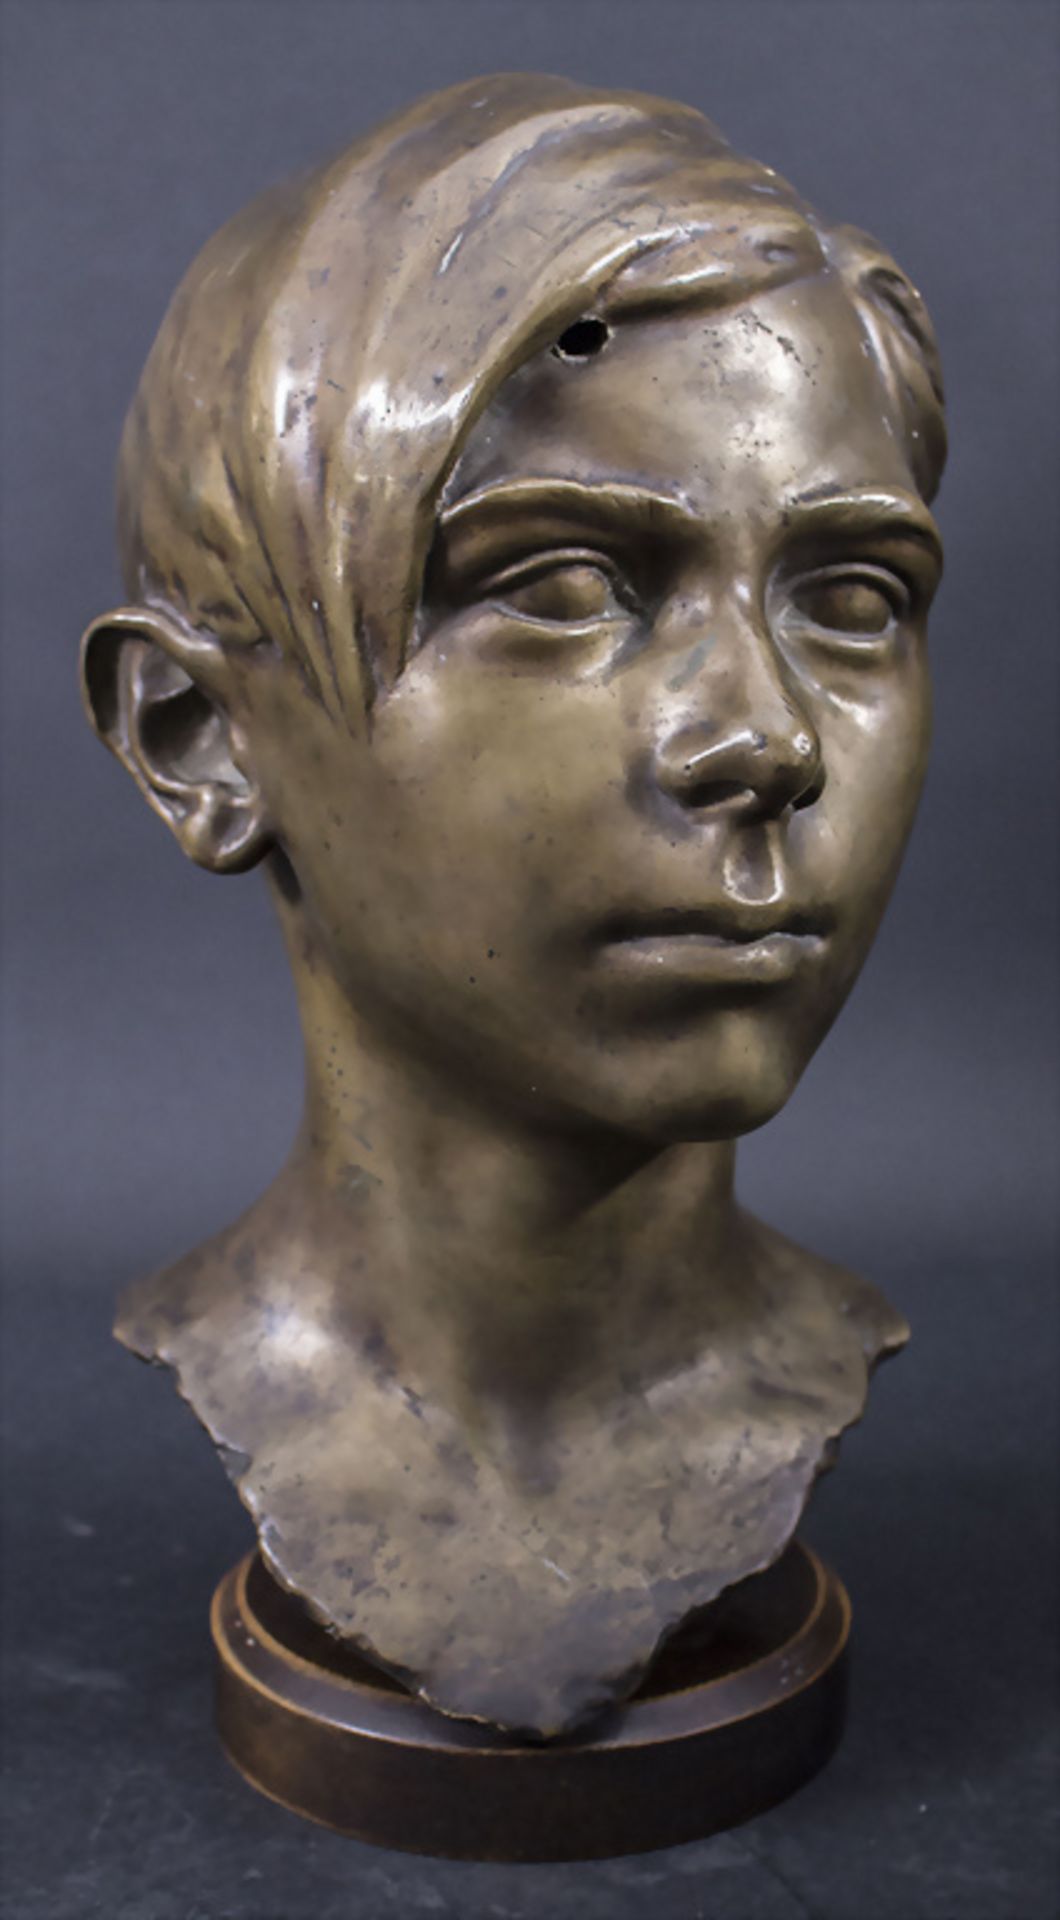 Bronzeplastik 'Knabe' / An Art Nouveau bronze sculpture of a young boy, Francois Vanczak, 1932 - Bild 2 aus 10